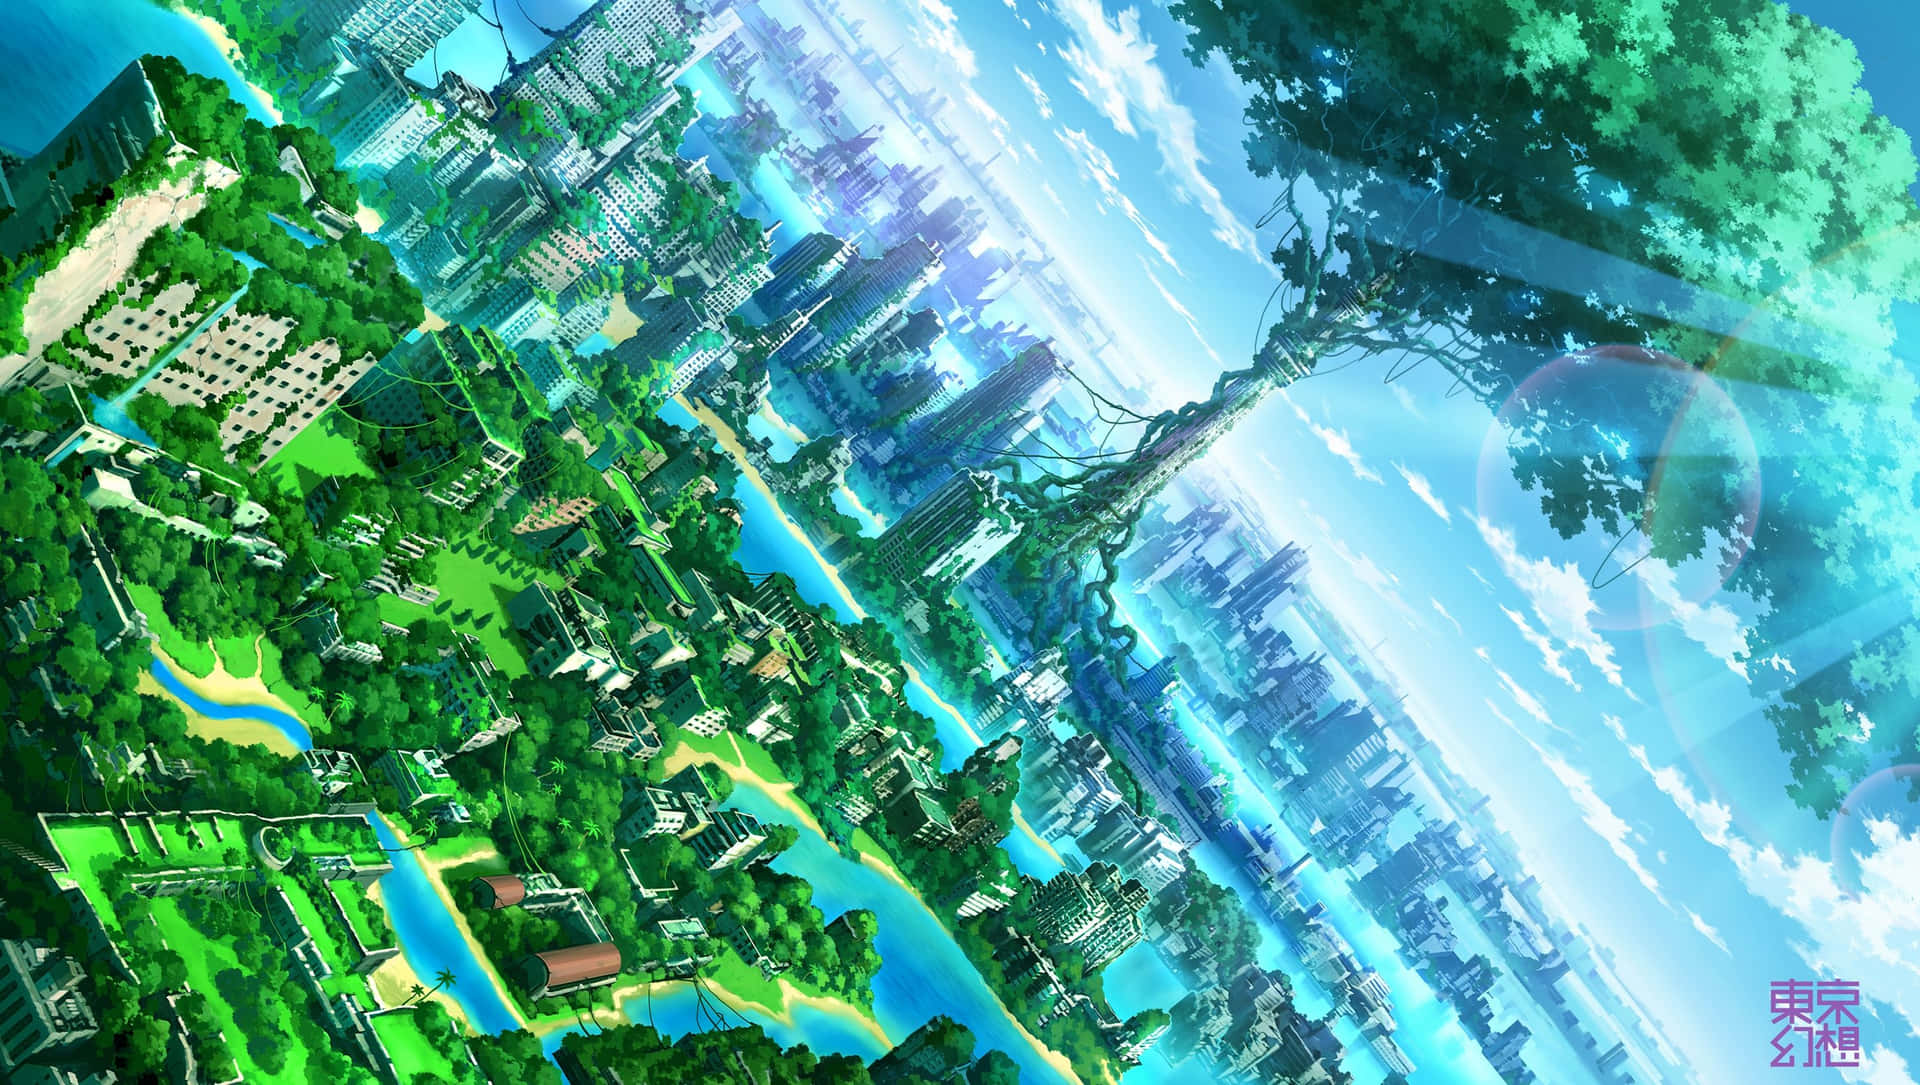 Anime Scenery Background